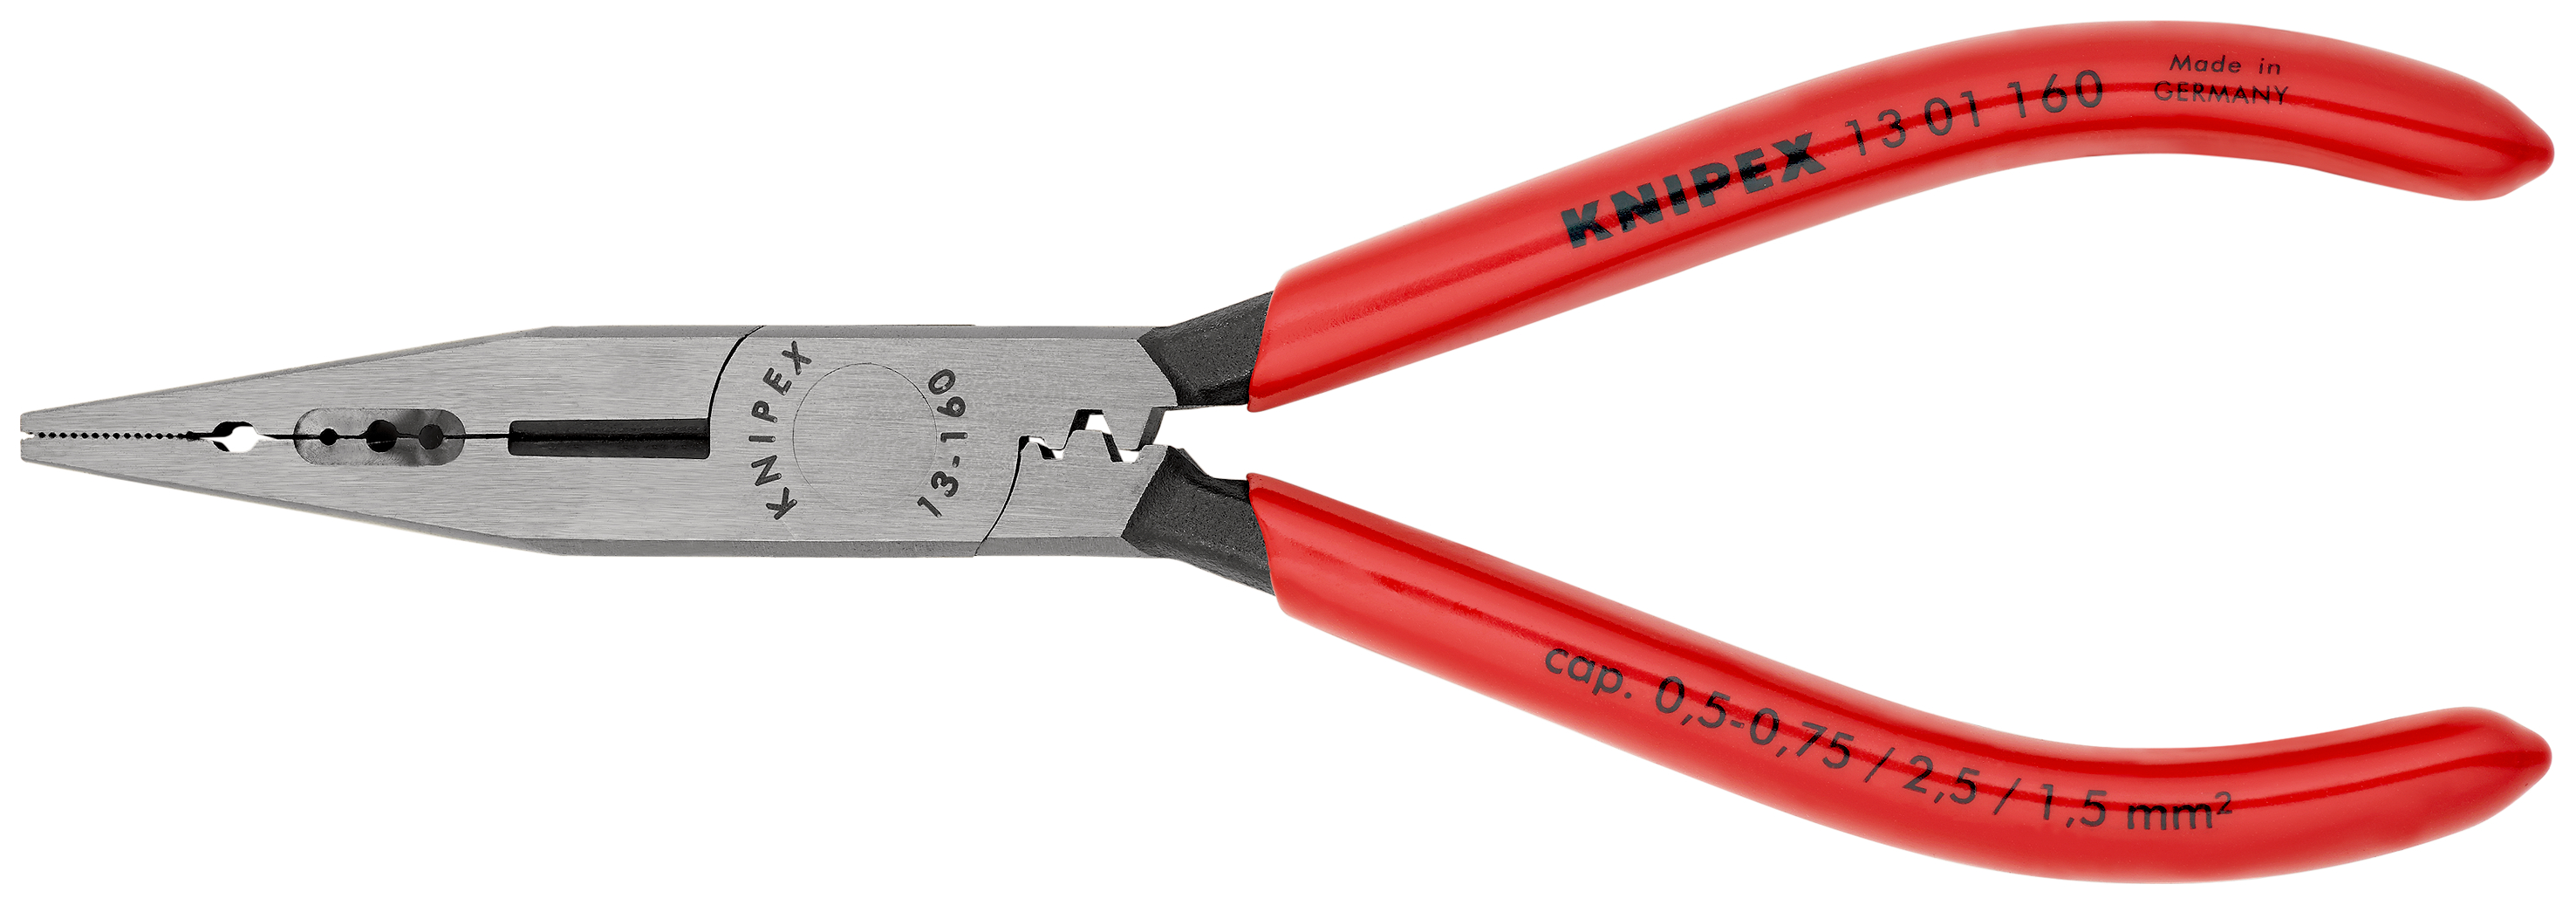 Knipex 1301160 Cleste de cablaj, manere acoperite cu plastic, lungime 160 mm